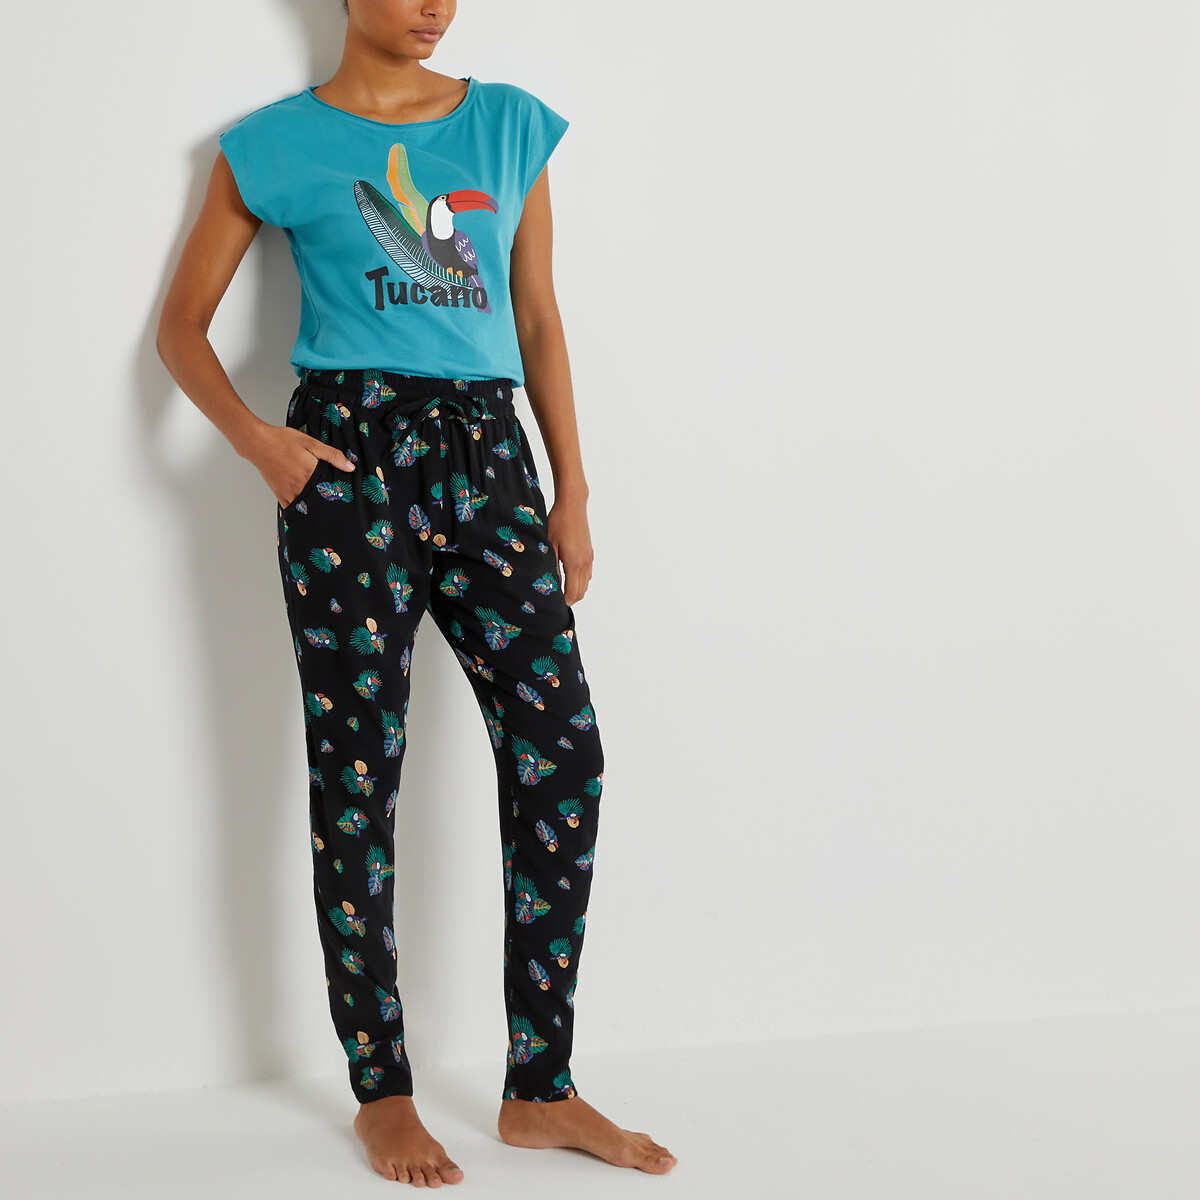 Toucan Print Pyjamas with Short Sleeves